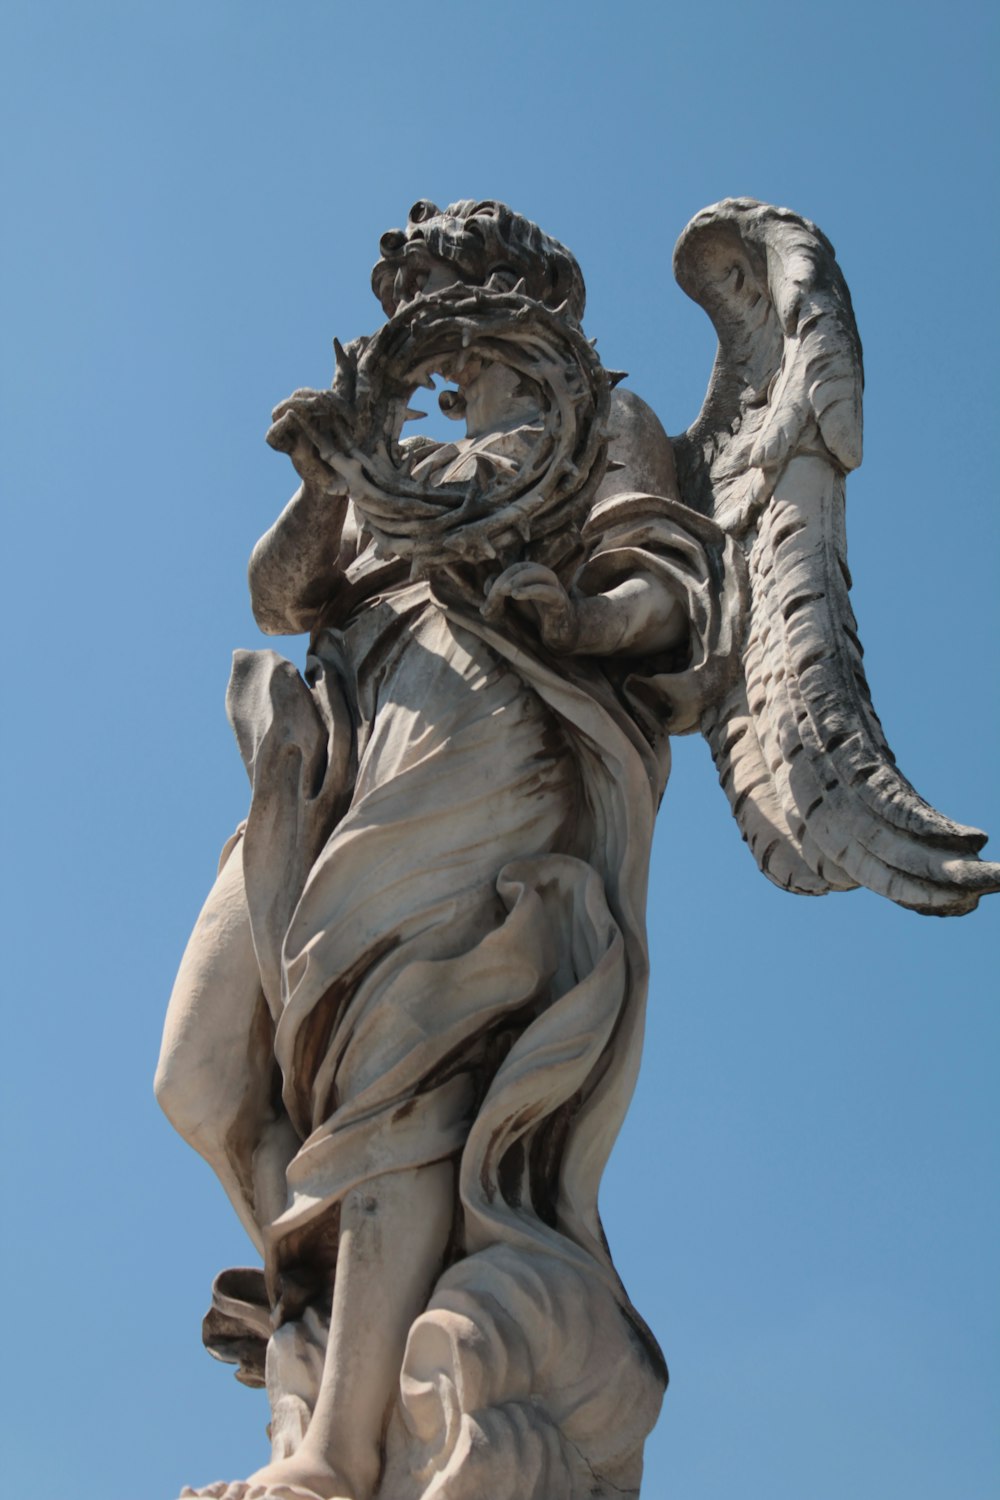 a statue of an angel holding a flower